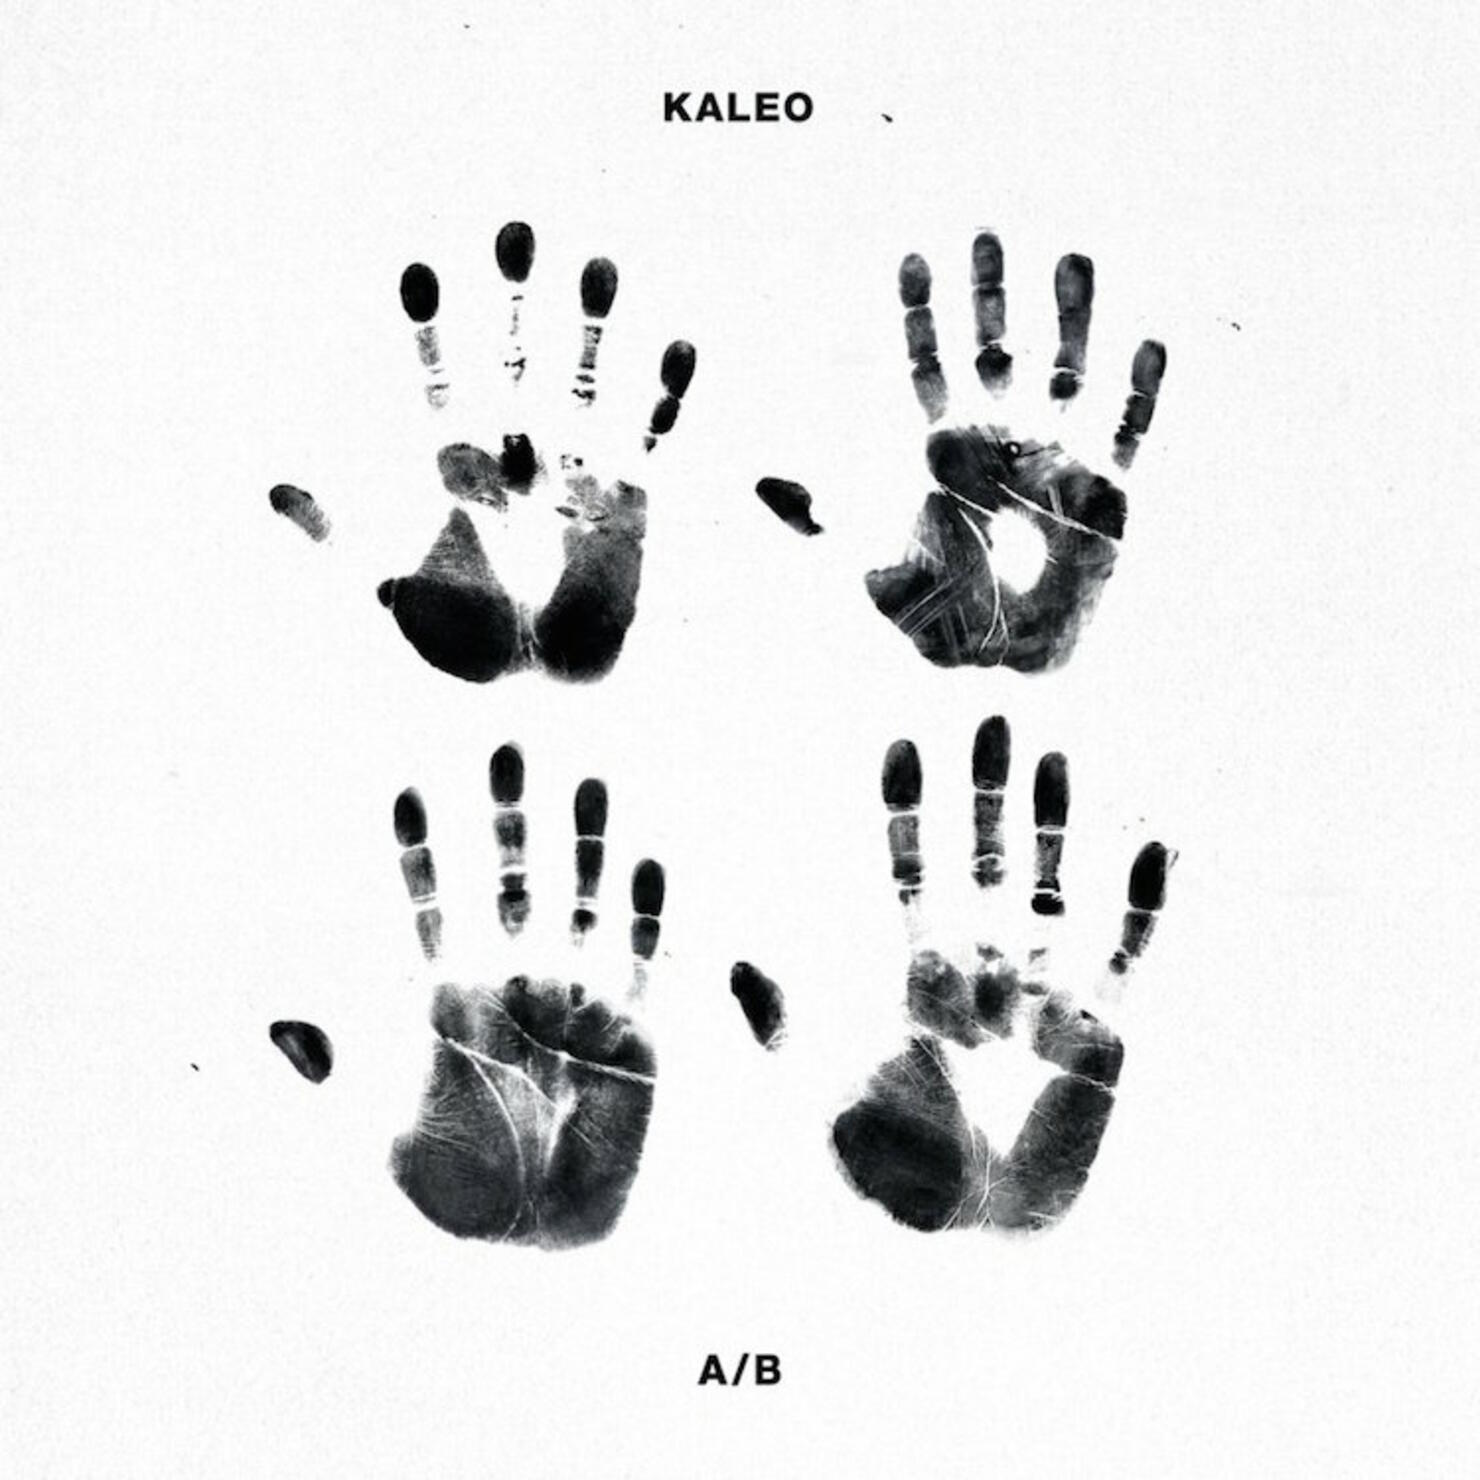 KALEO NEW ALBUM A/B COVER ART